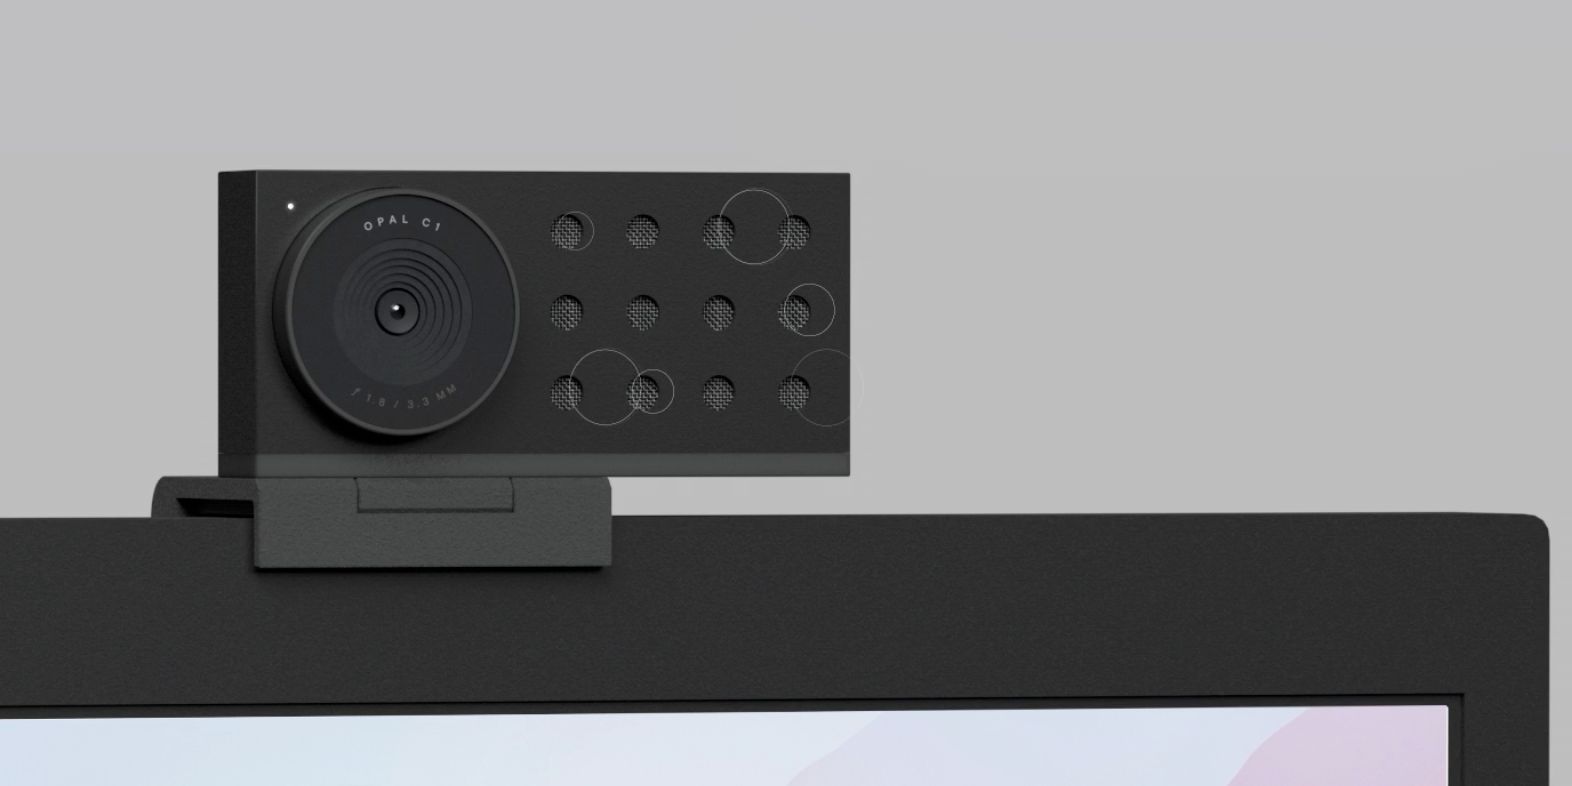 Opal C1 webcam